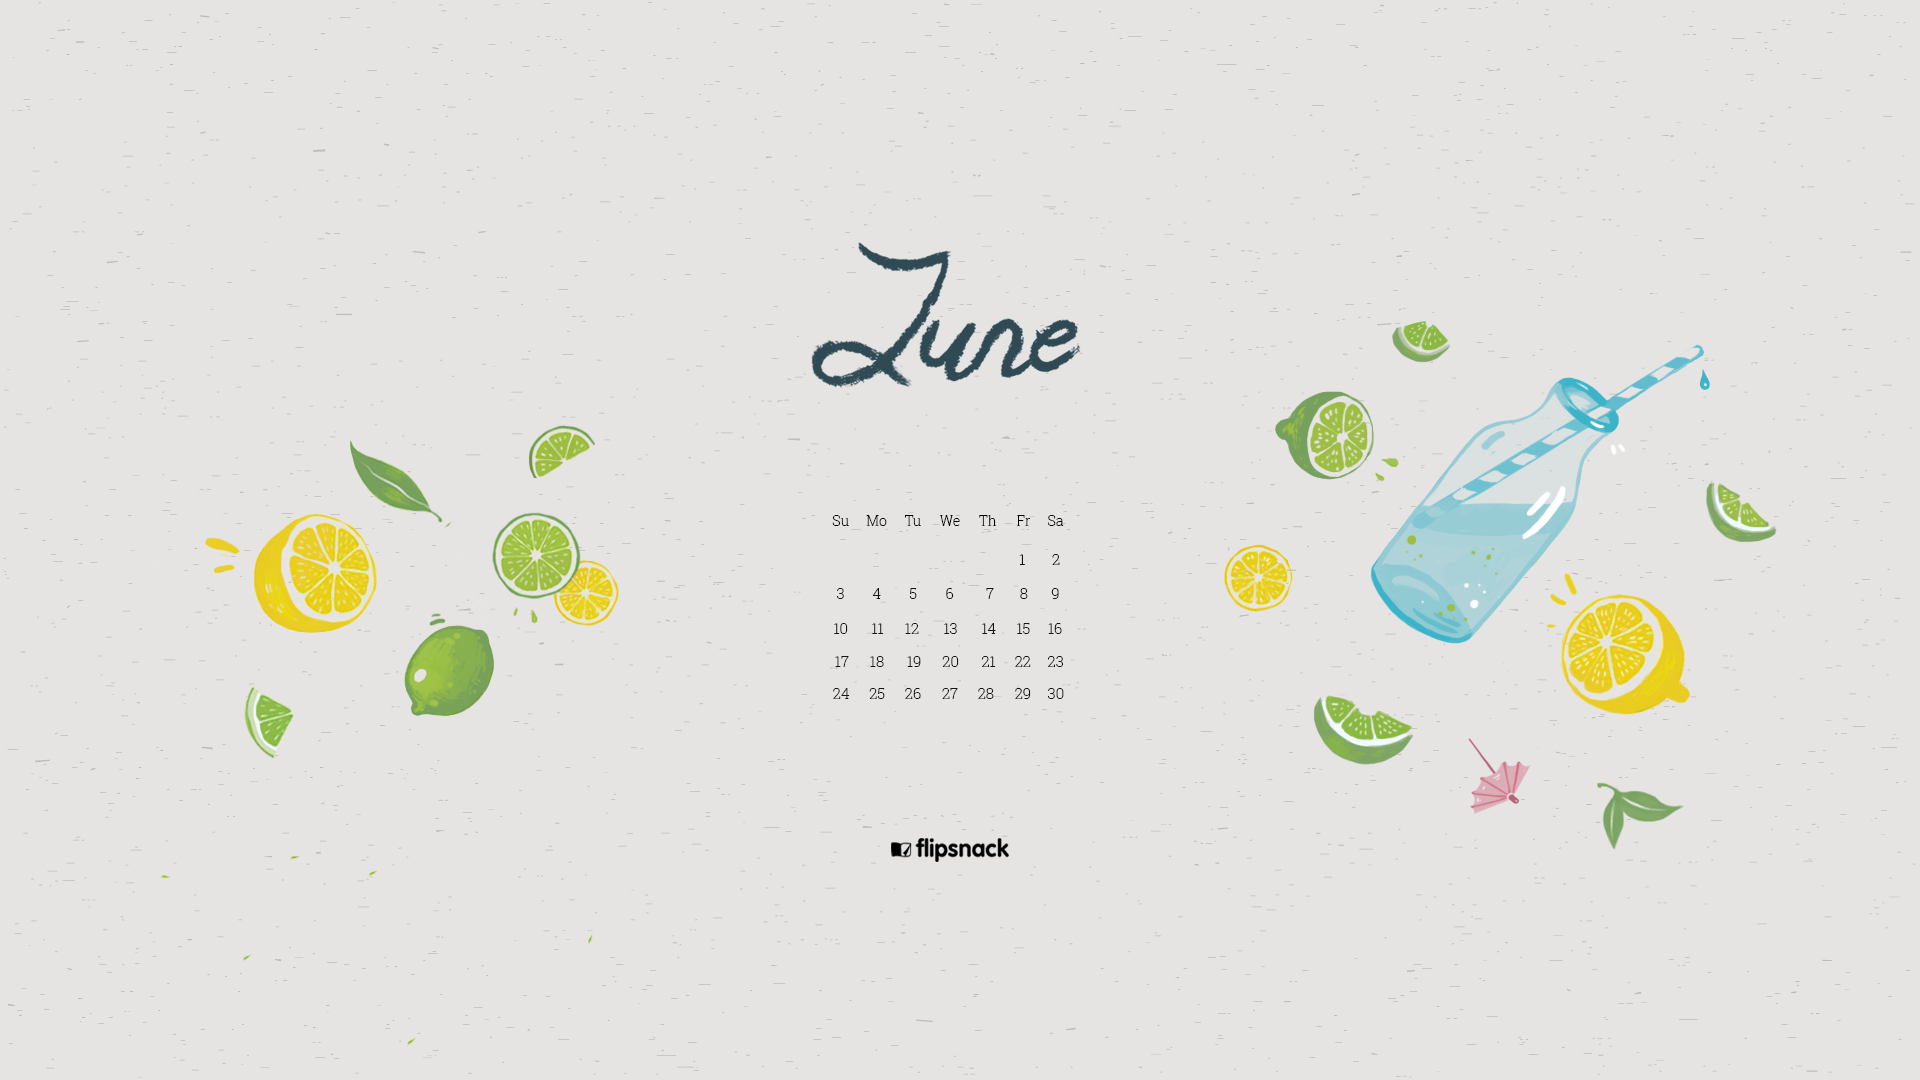 June 2018 wallpaper calendar for desktop & smartphone